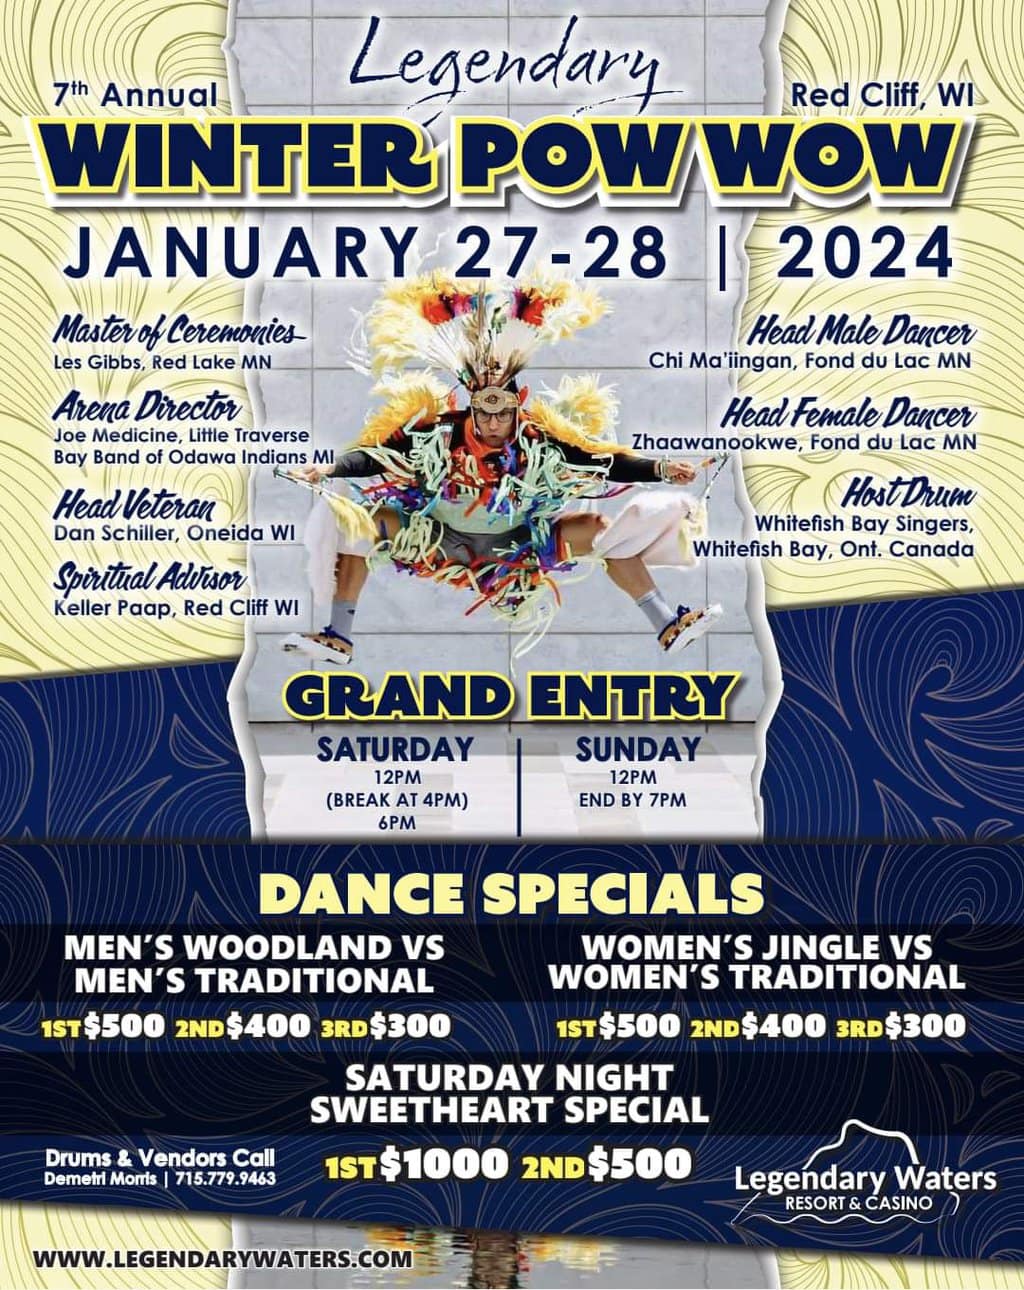 7th Annual Legendary Winter Pow Wow 2024